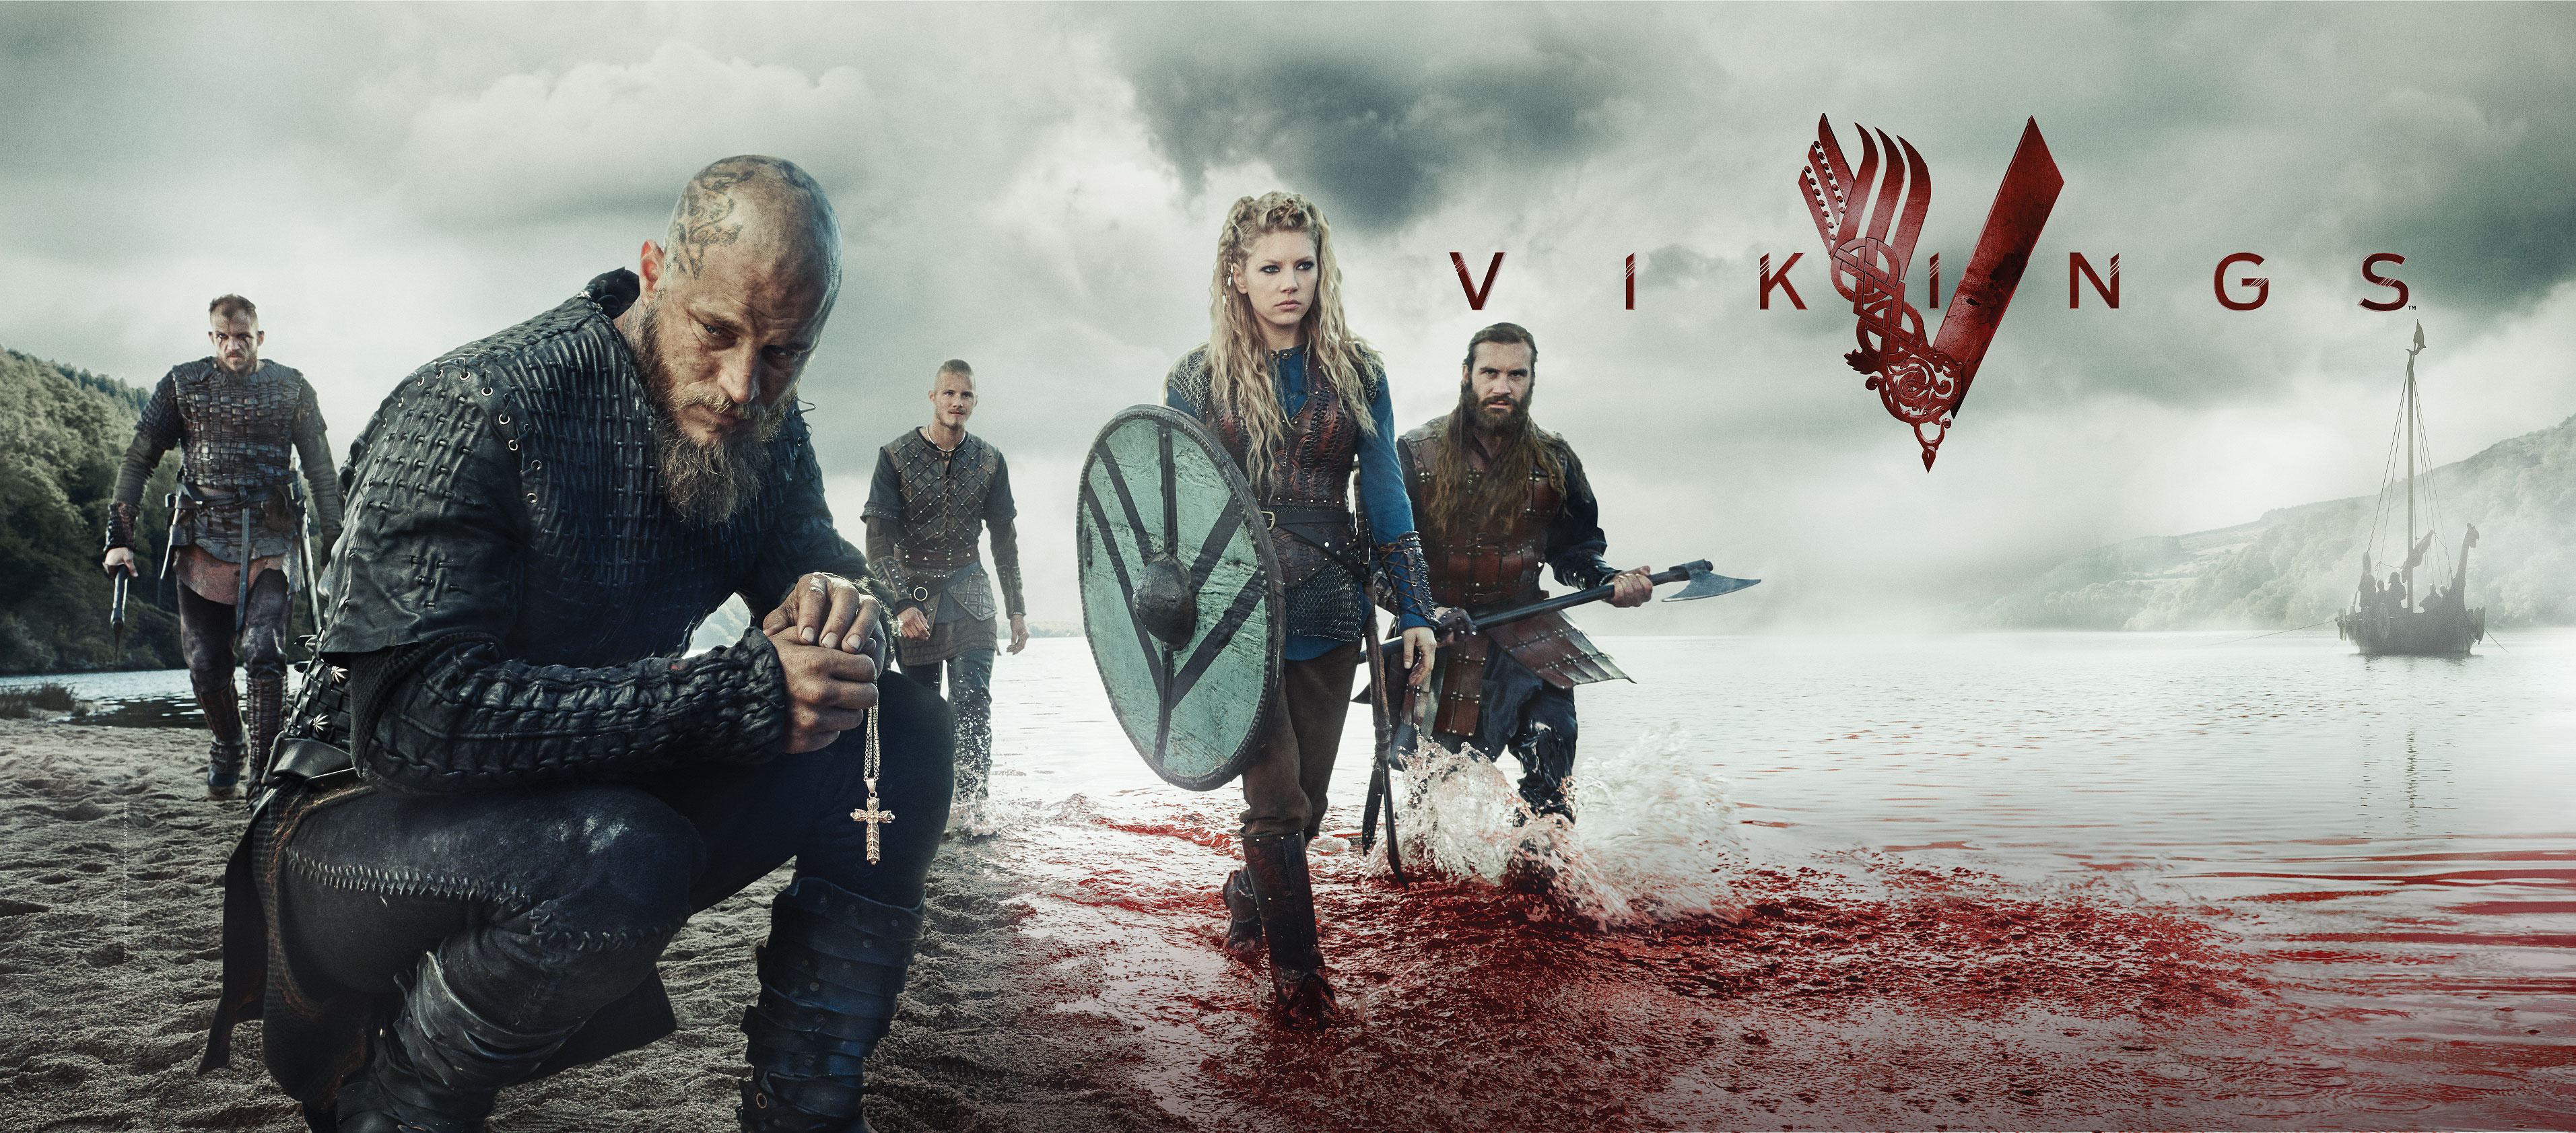 Vikings TV Series, Viking warriors, Dramatic battle scenes, Nordic mythology, 3830x1690 Dual Screen Desktop